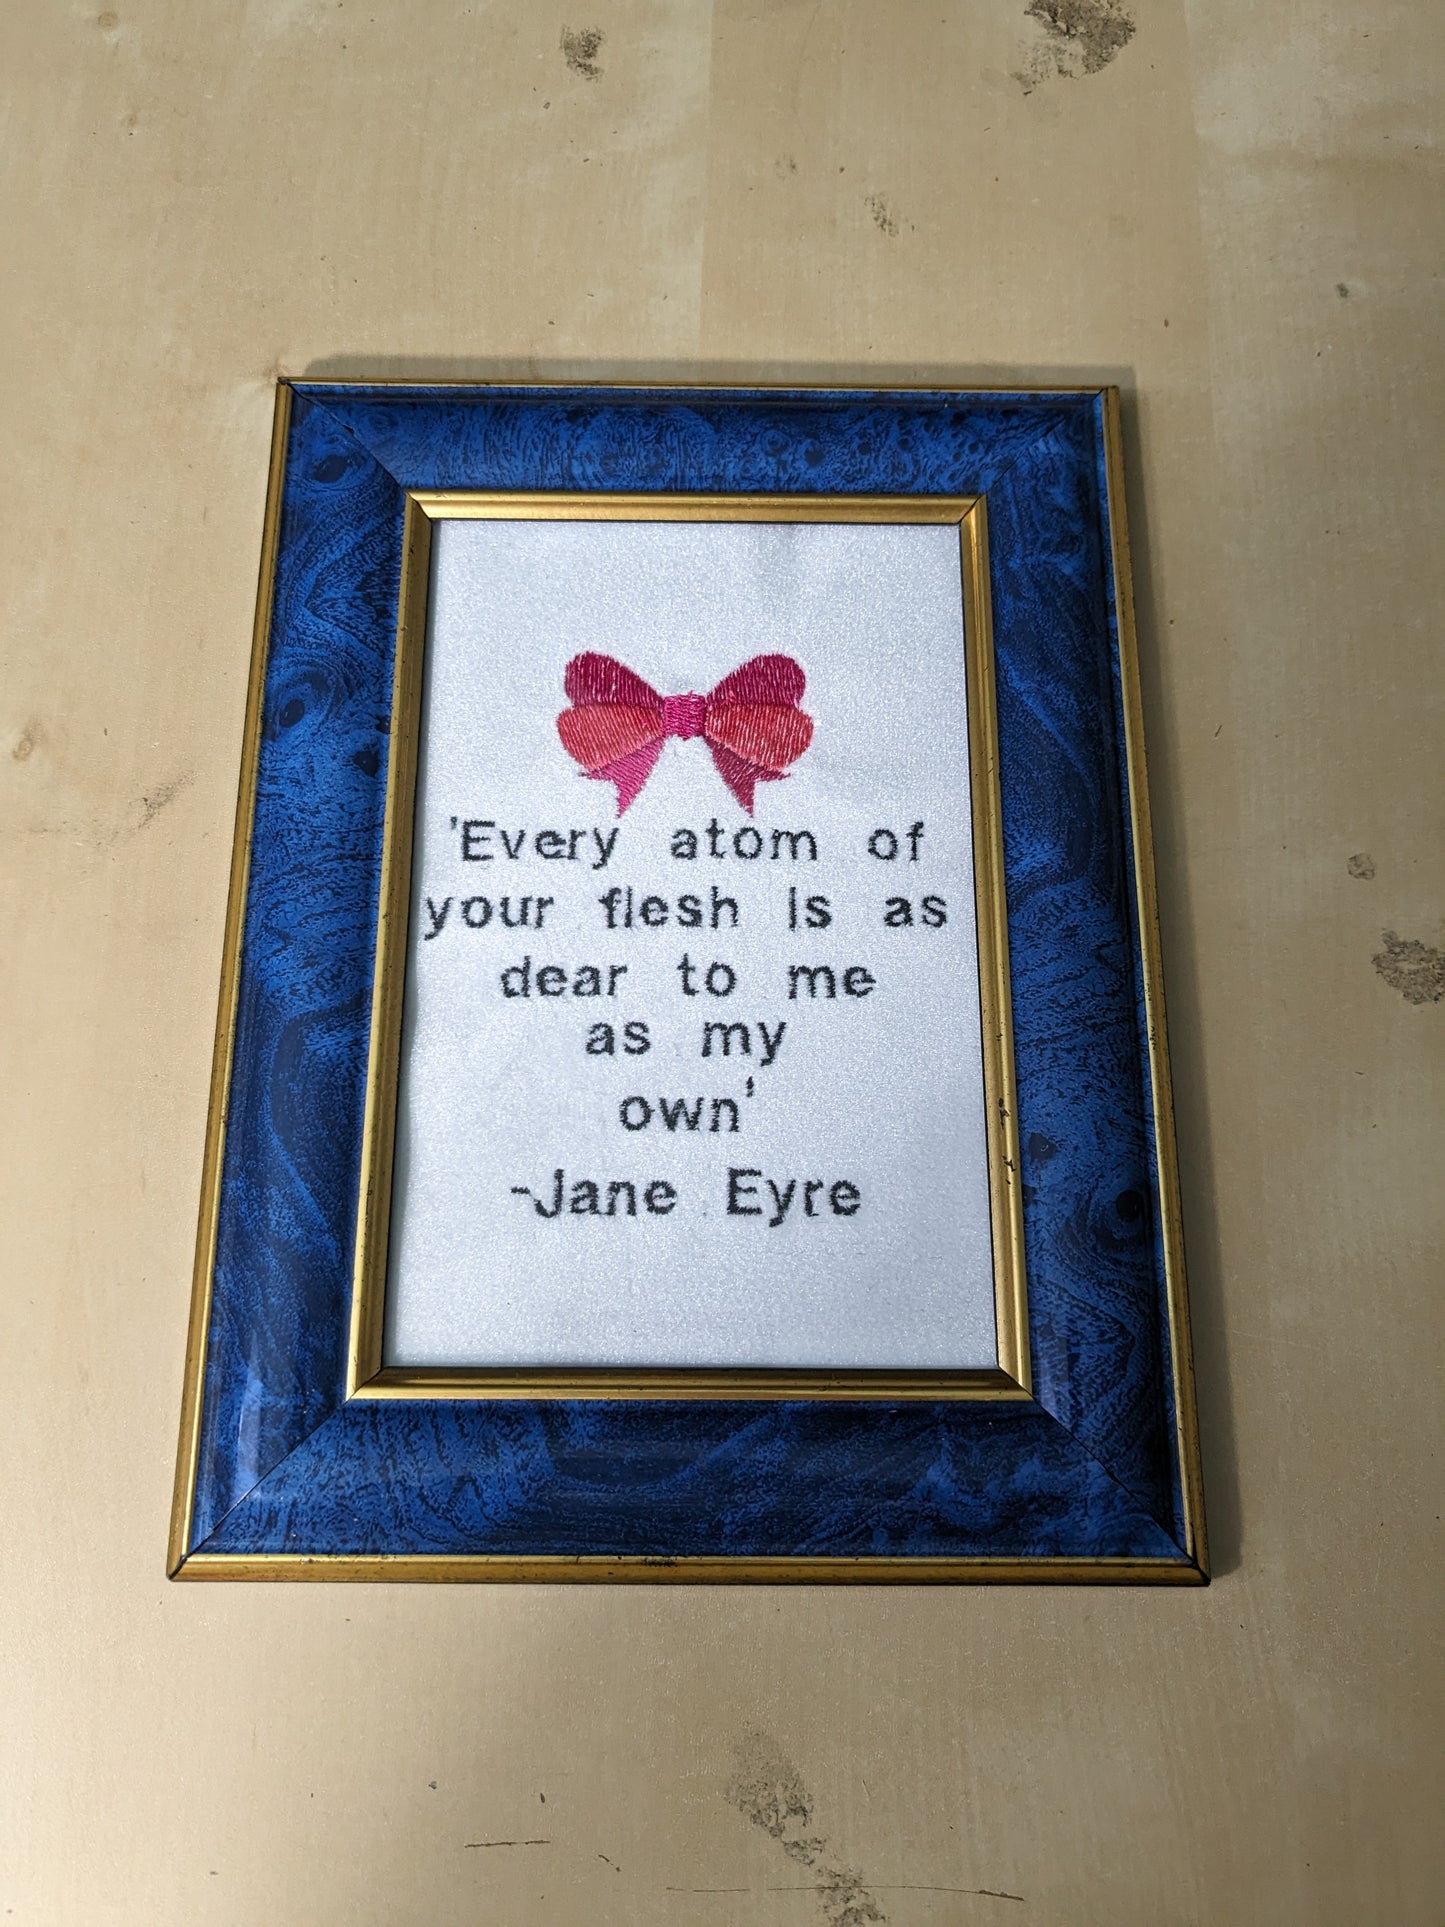 Jane Eyre - Charlotte Brontë Framed Embroidered Artwork - Perfect Valentine's Day Gift